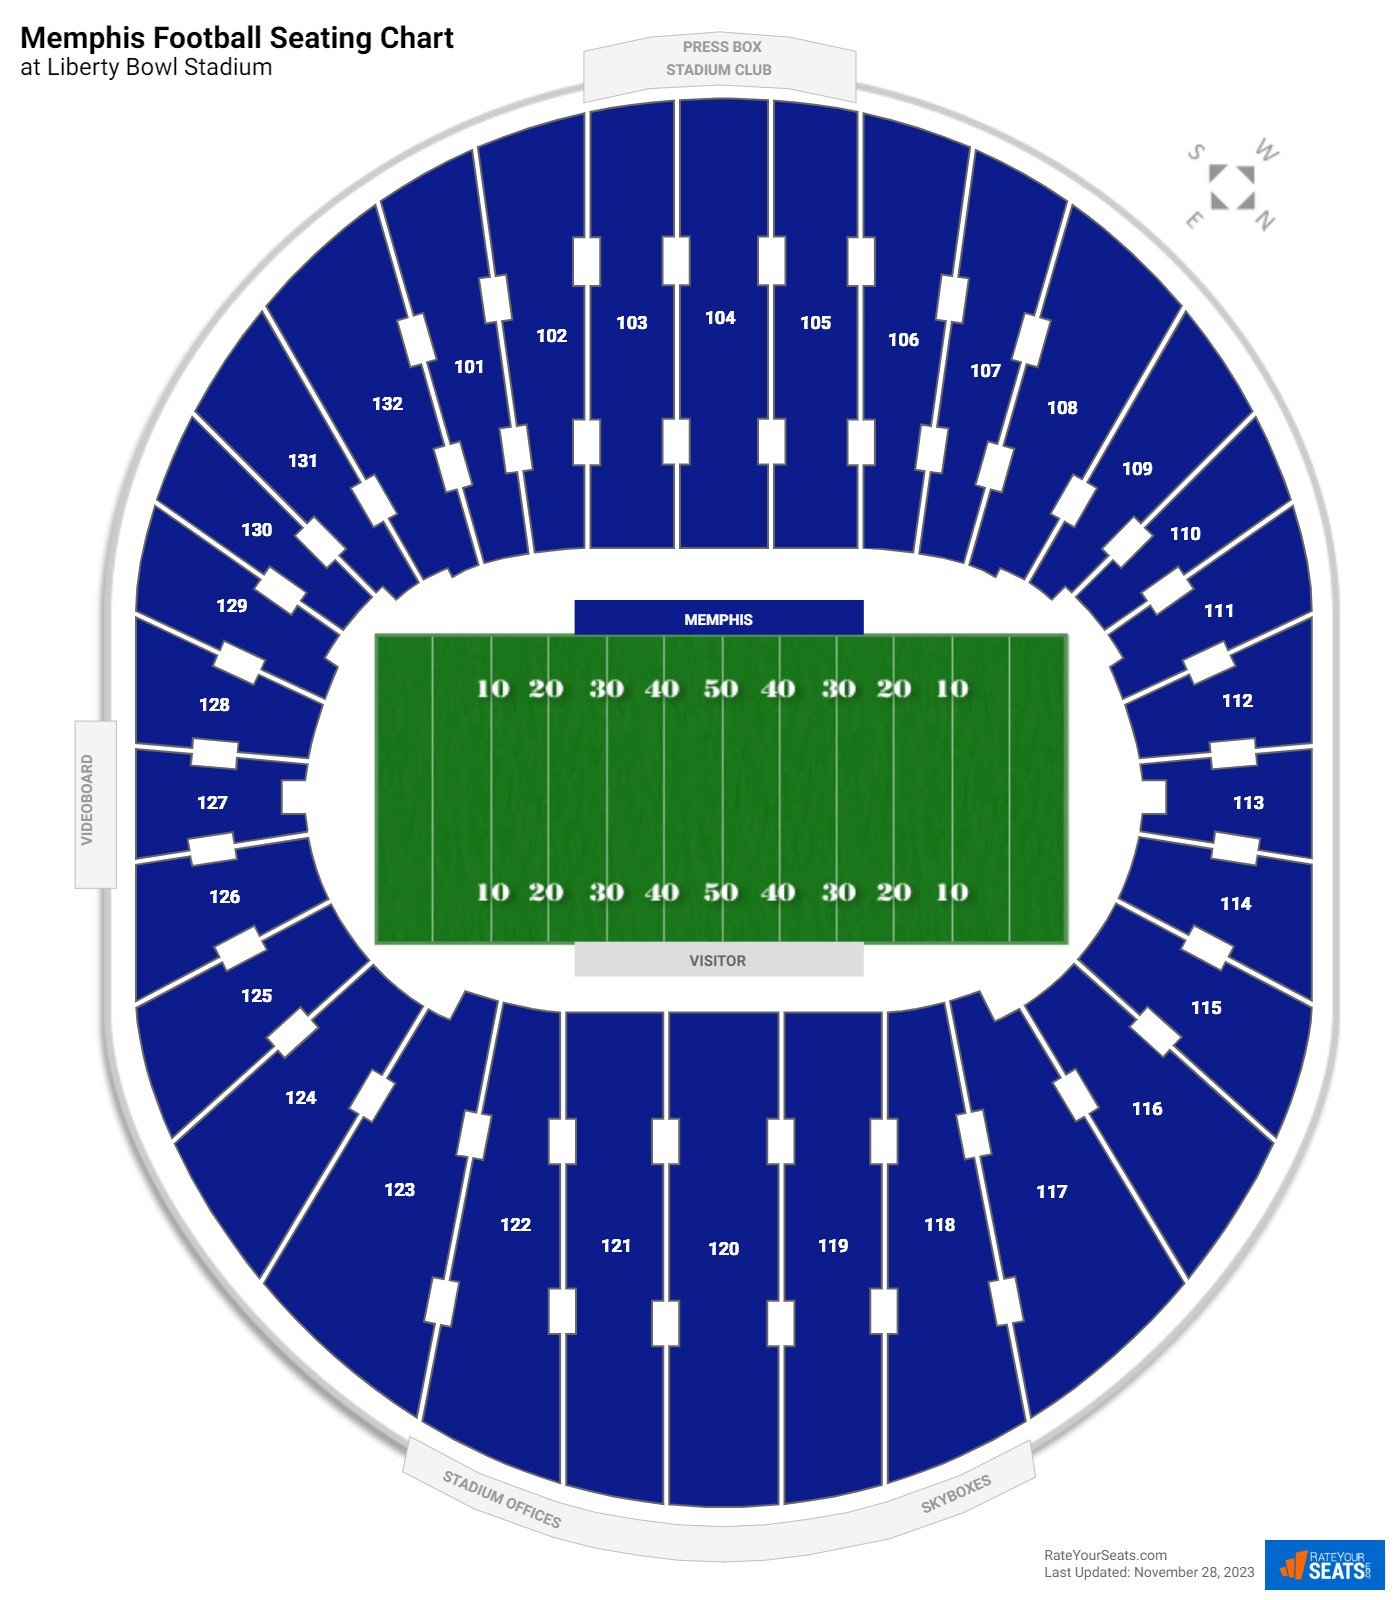 Memphis Tigers Seating Chart at Liberty Bowl Stadium